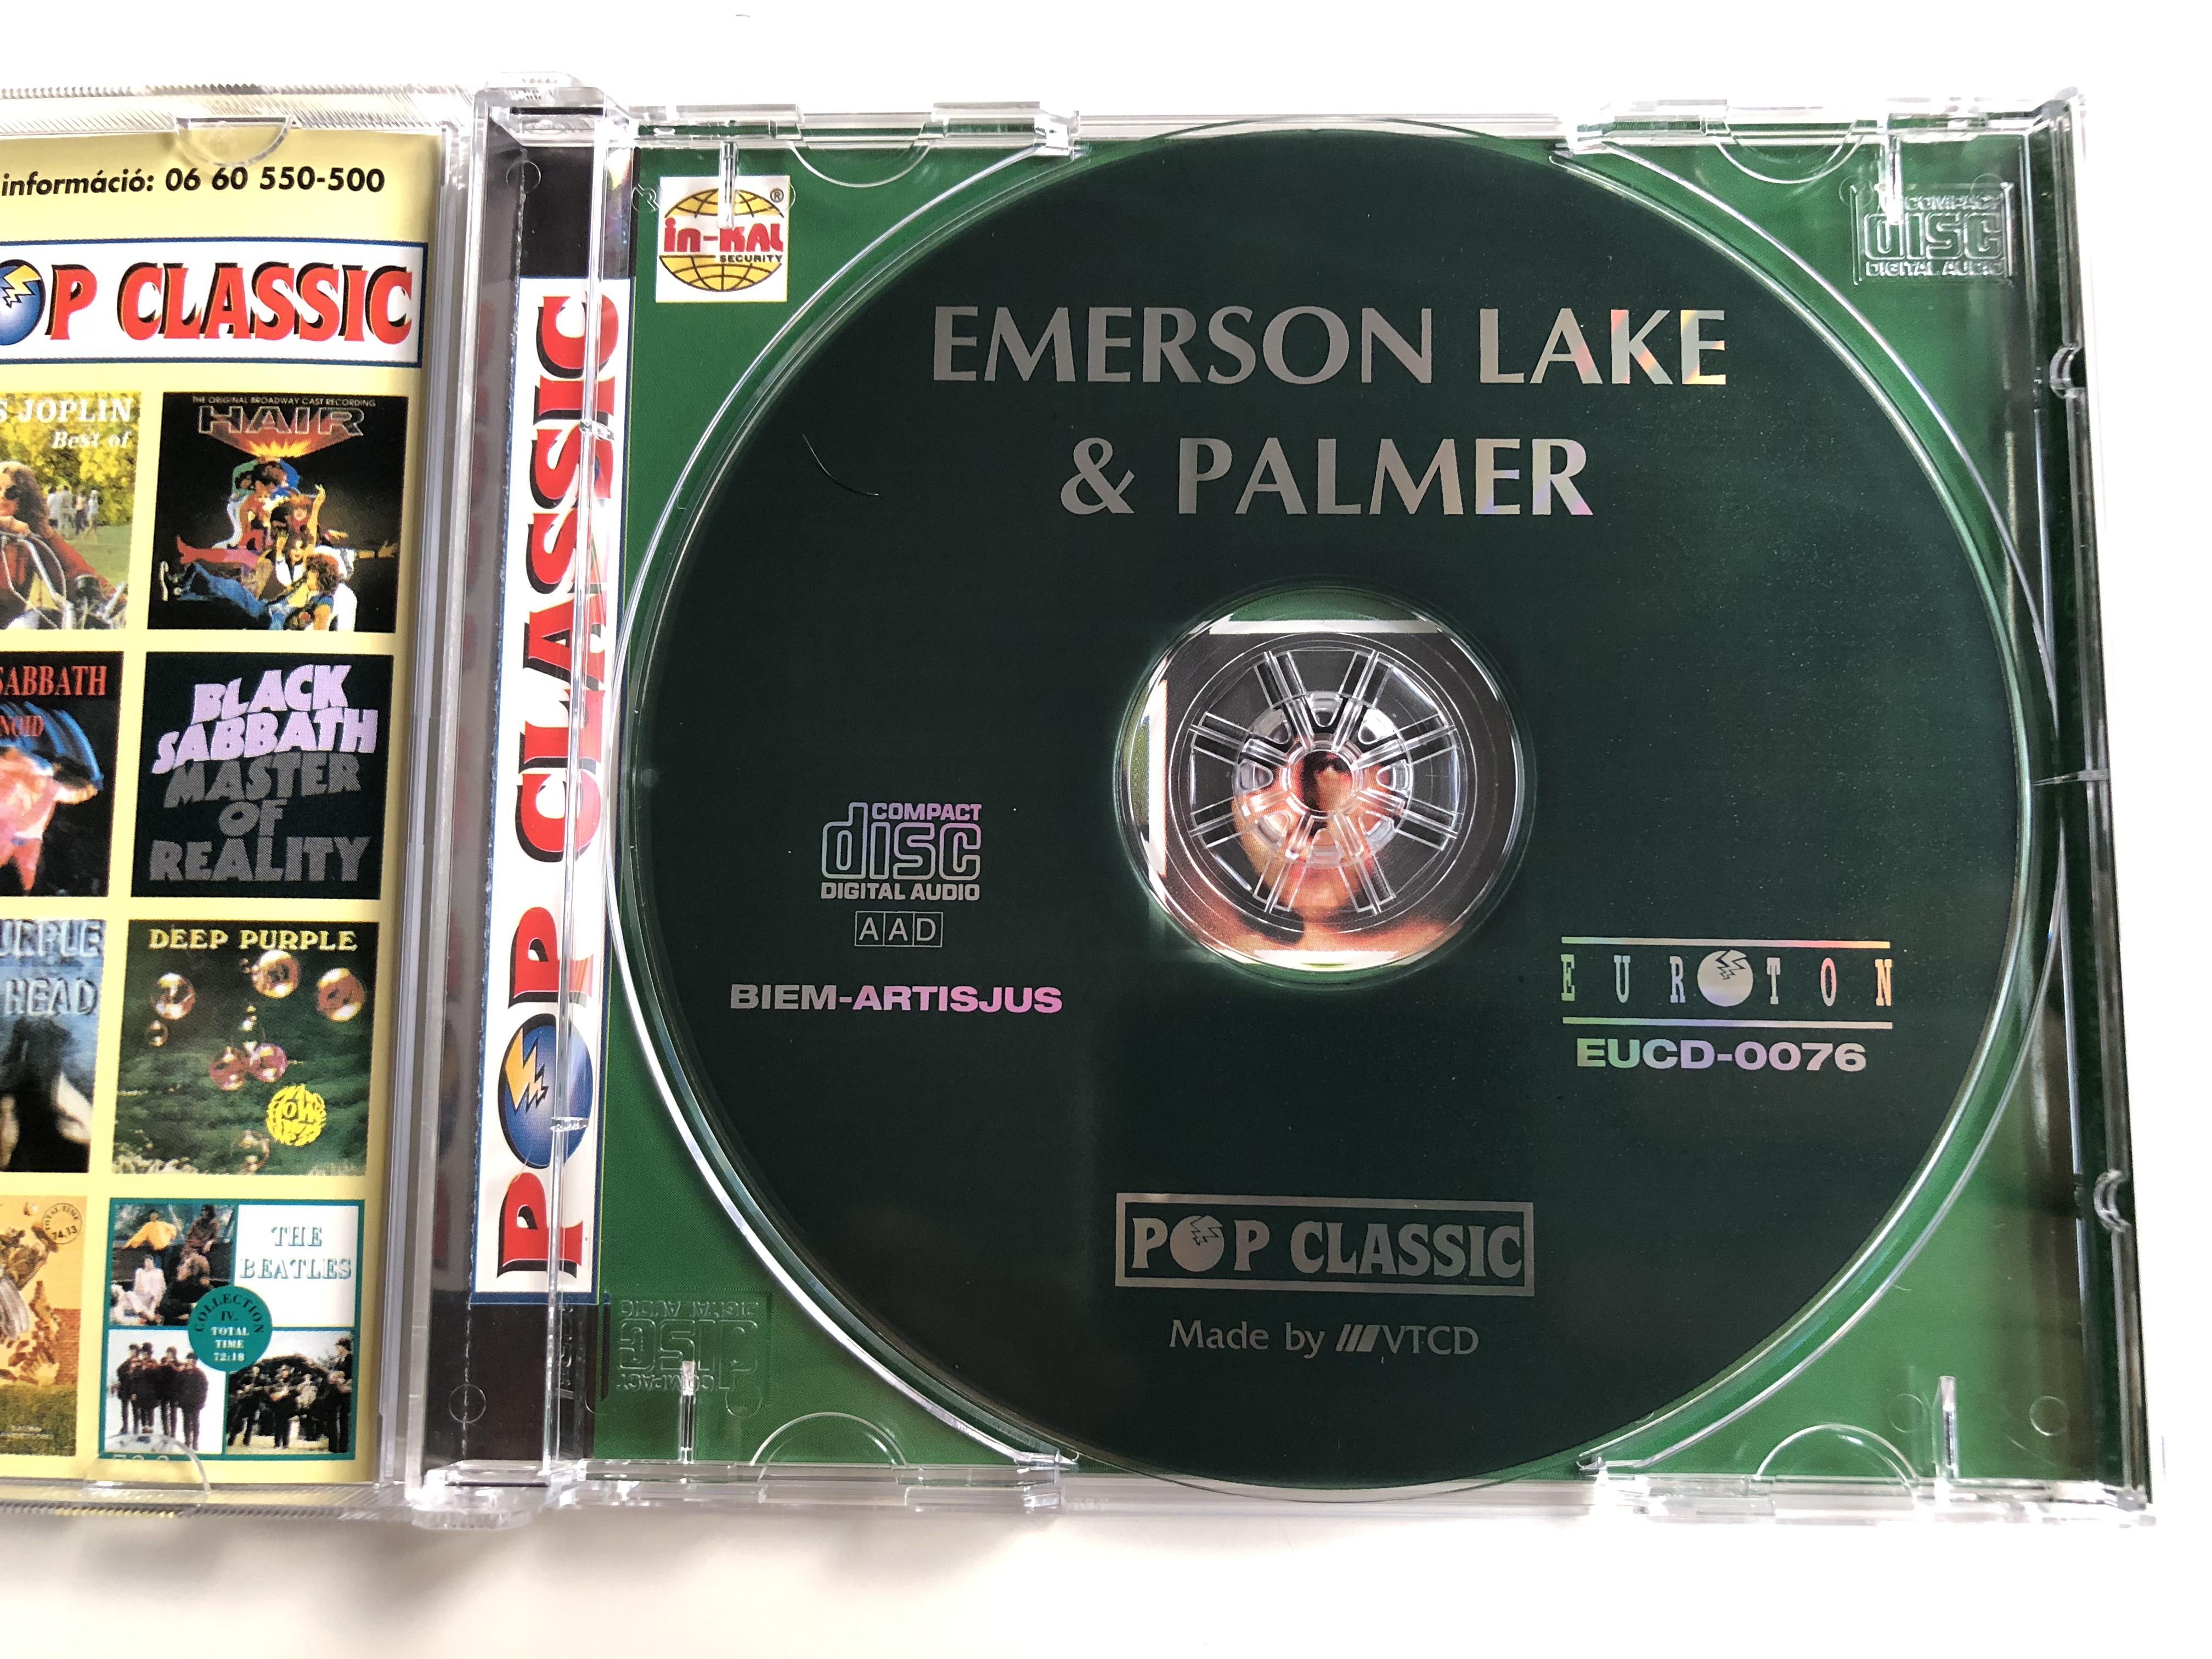 emerson-lake-palmer-best-of-total-time-73.50-pop-classic-euroton-audio-cd-eucd-0076-2-.jpg